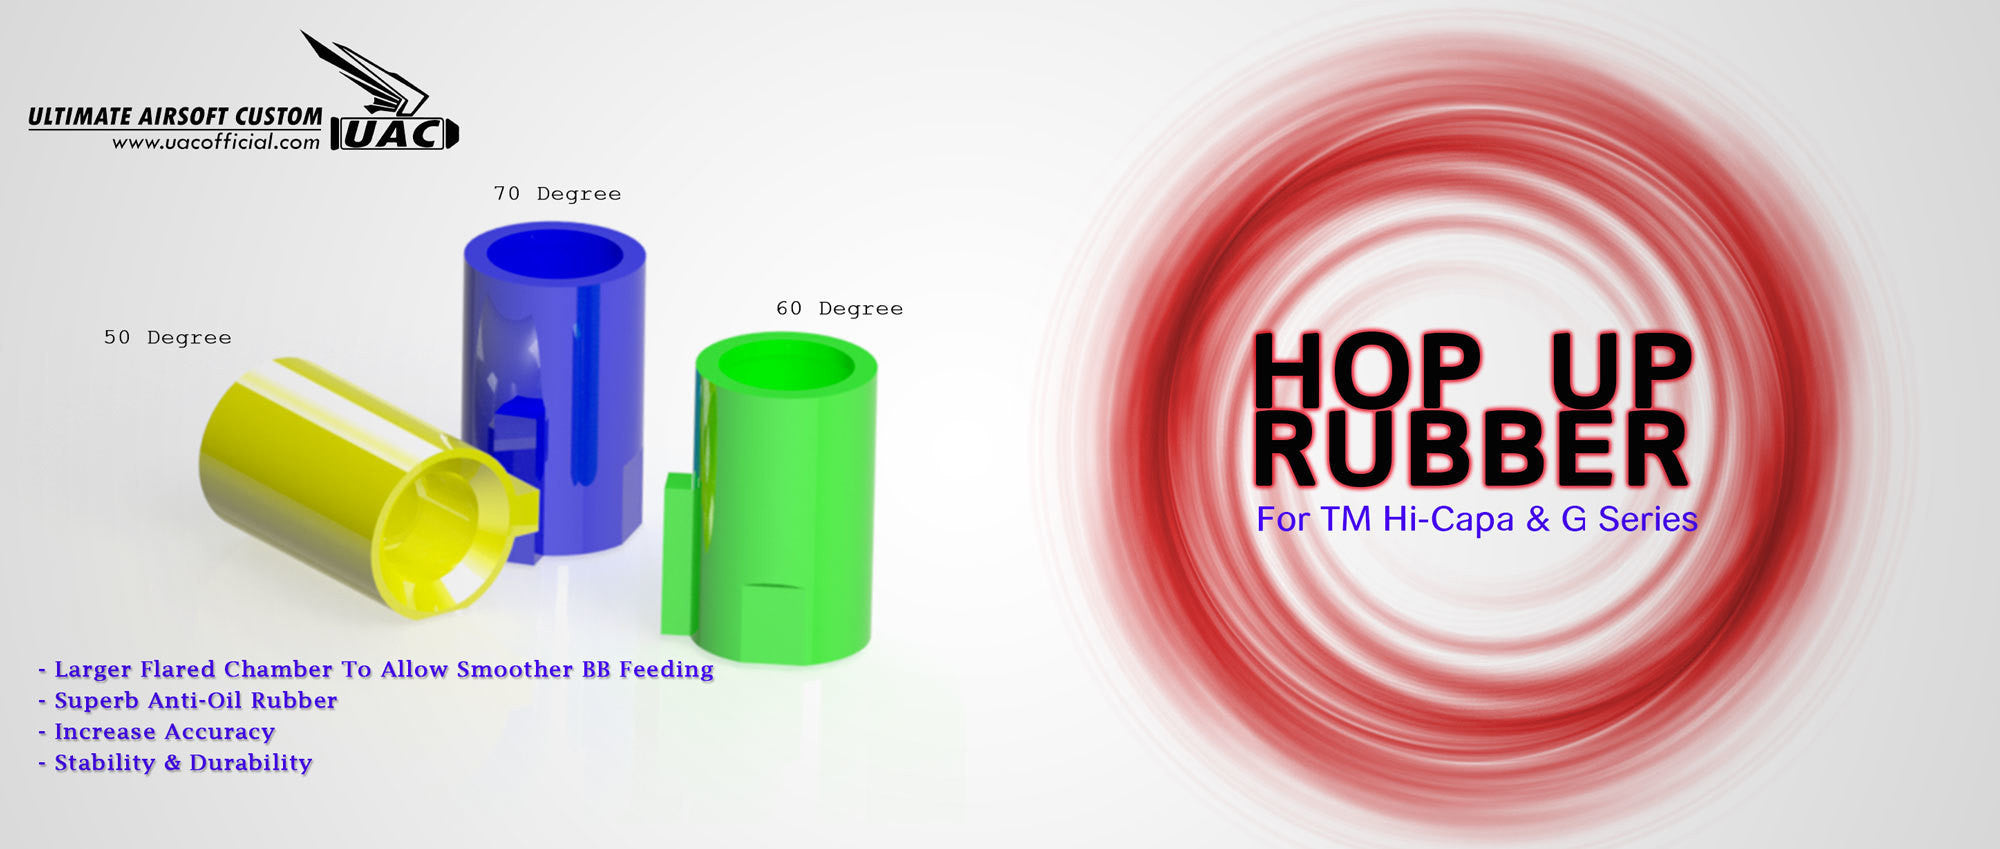 DP Hop Up Rubber For TM Hi-capa, G series, M&P9 & M4A1 MWS (50°)